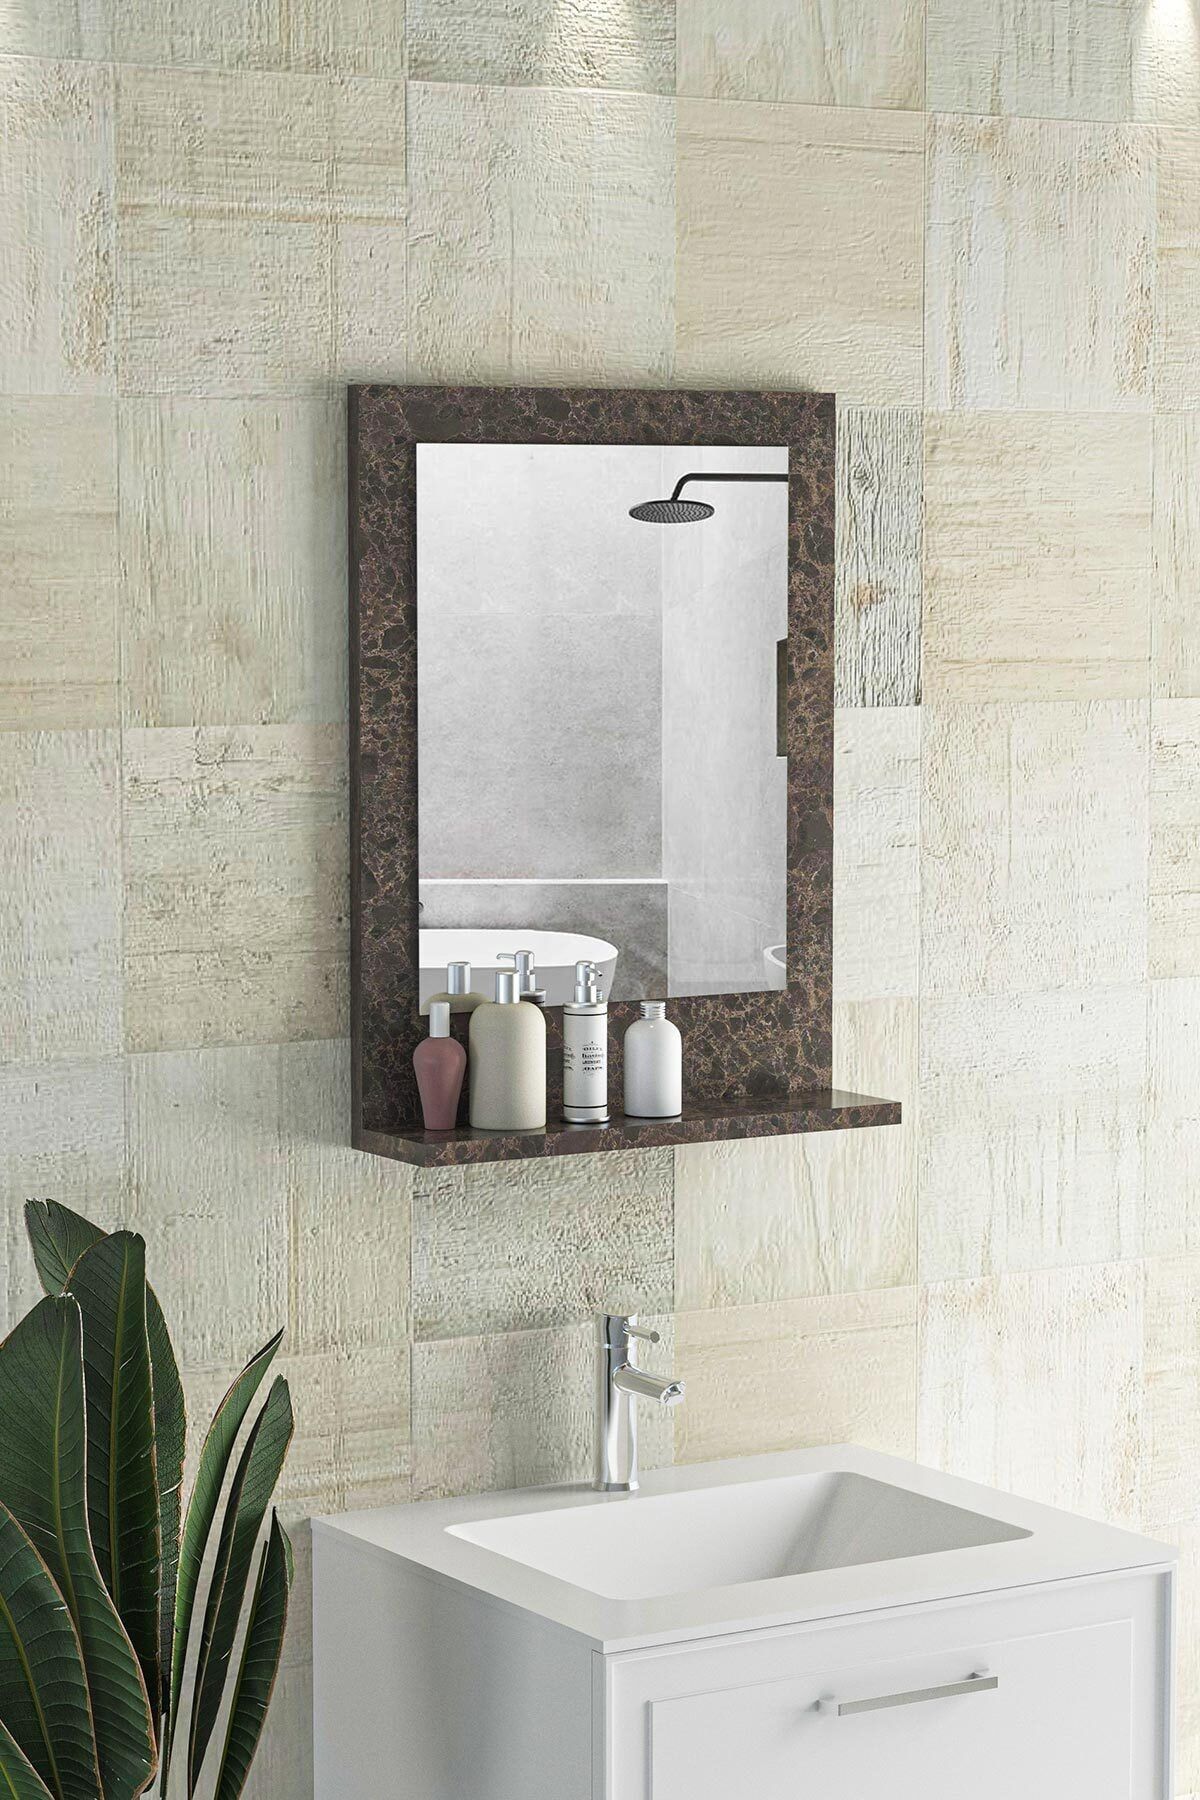 bluecape Verona 45x60cm Ürgüp Raflı Banyo Dolabı Dresuar Hol Koridor Duvar Salon Wc Ofis Yatak Odası Boy Ayna